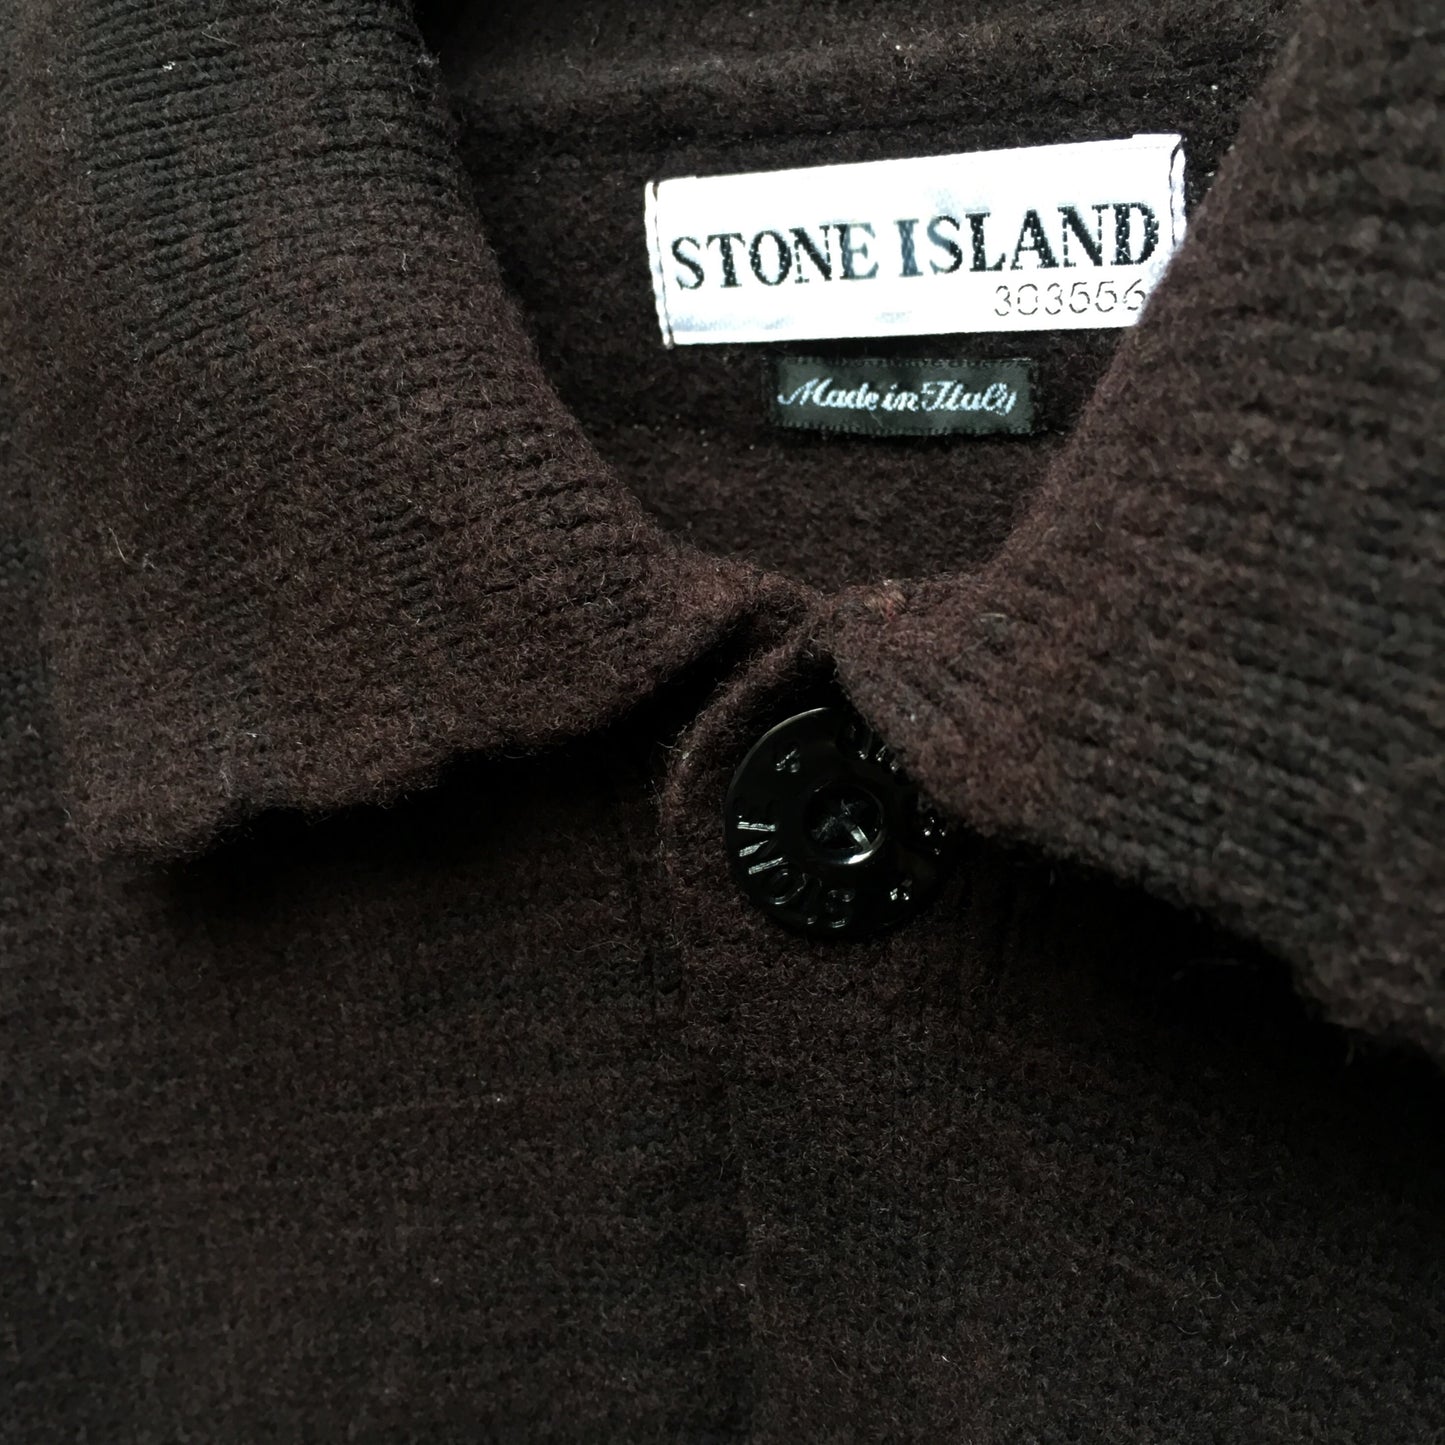 Stone Island AW 2002 Full Button Cardigan - M/L